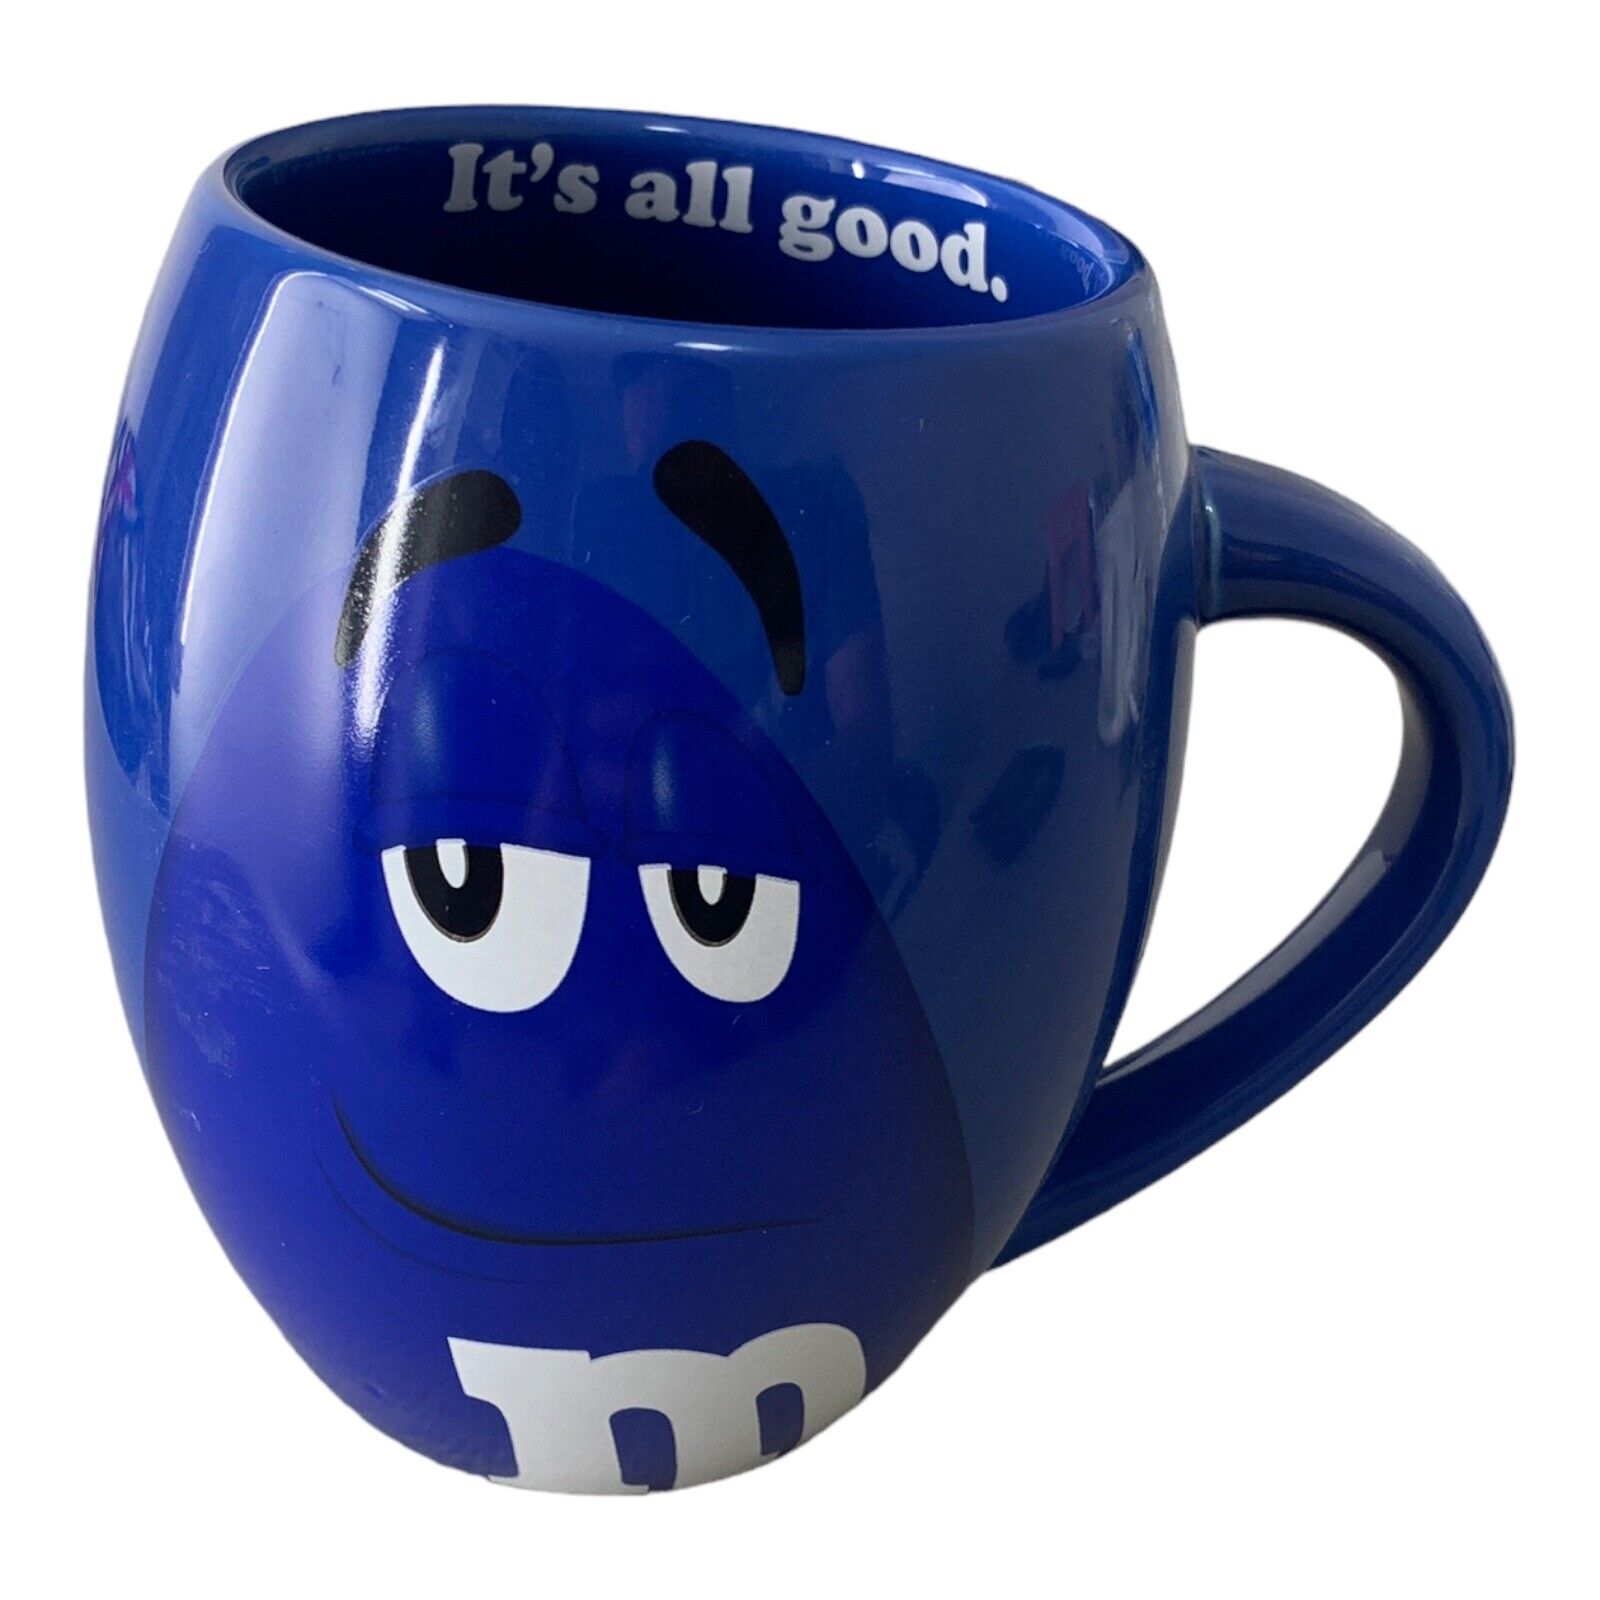 M&M Coffee Mug 20 Oz Blue “It’s all good” 2013 from M&M’s World 4.75”